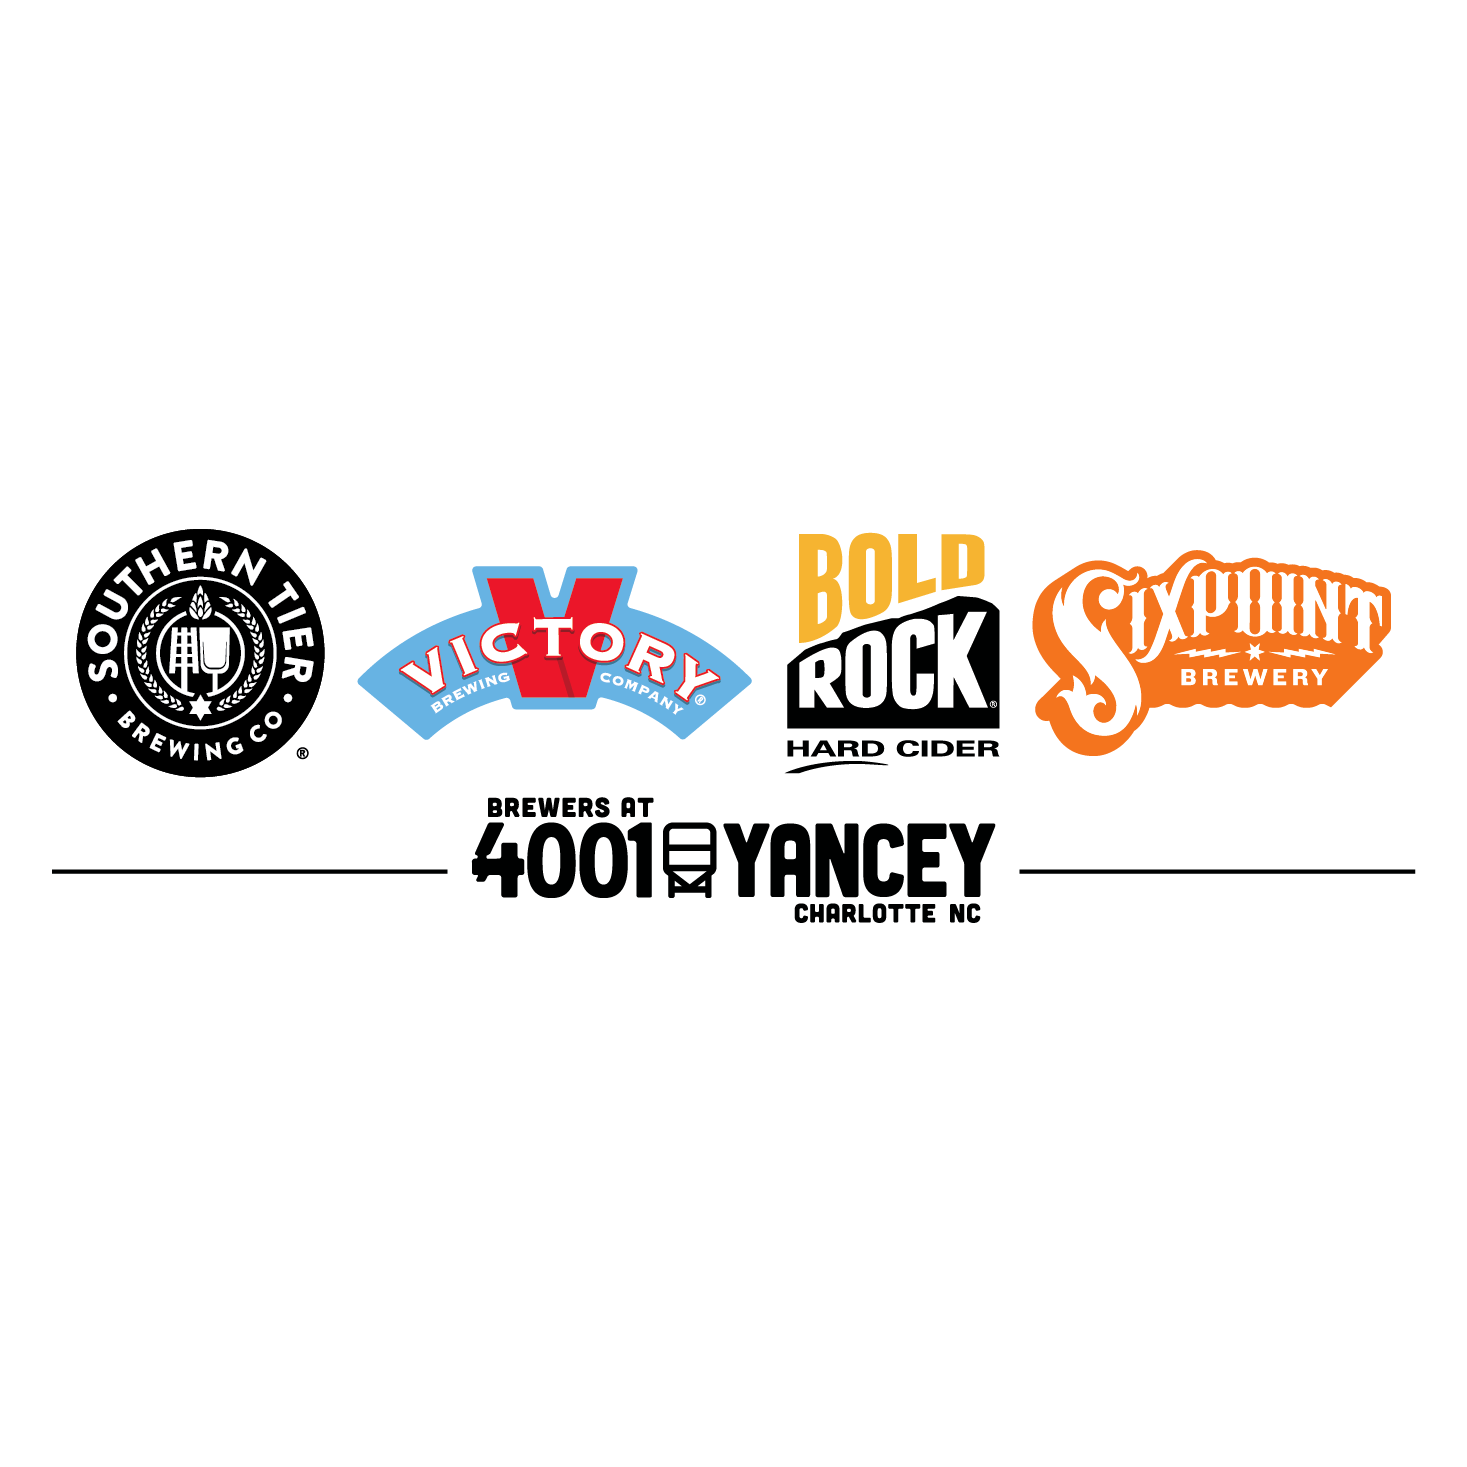 Brewers at 4001 Yancey Logo